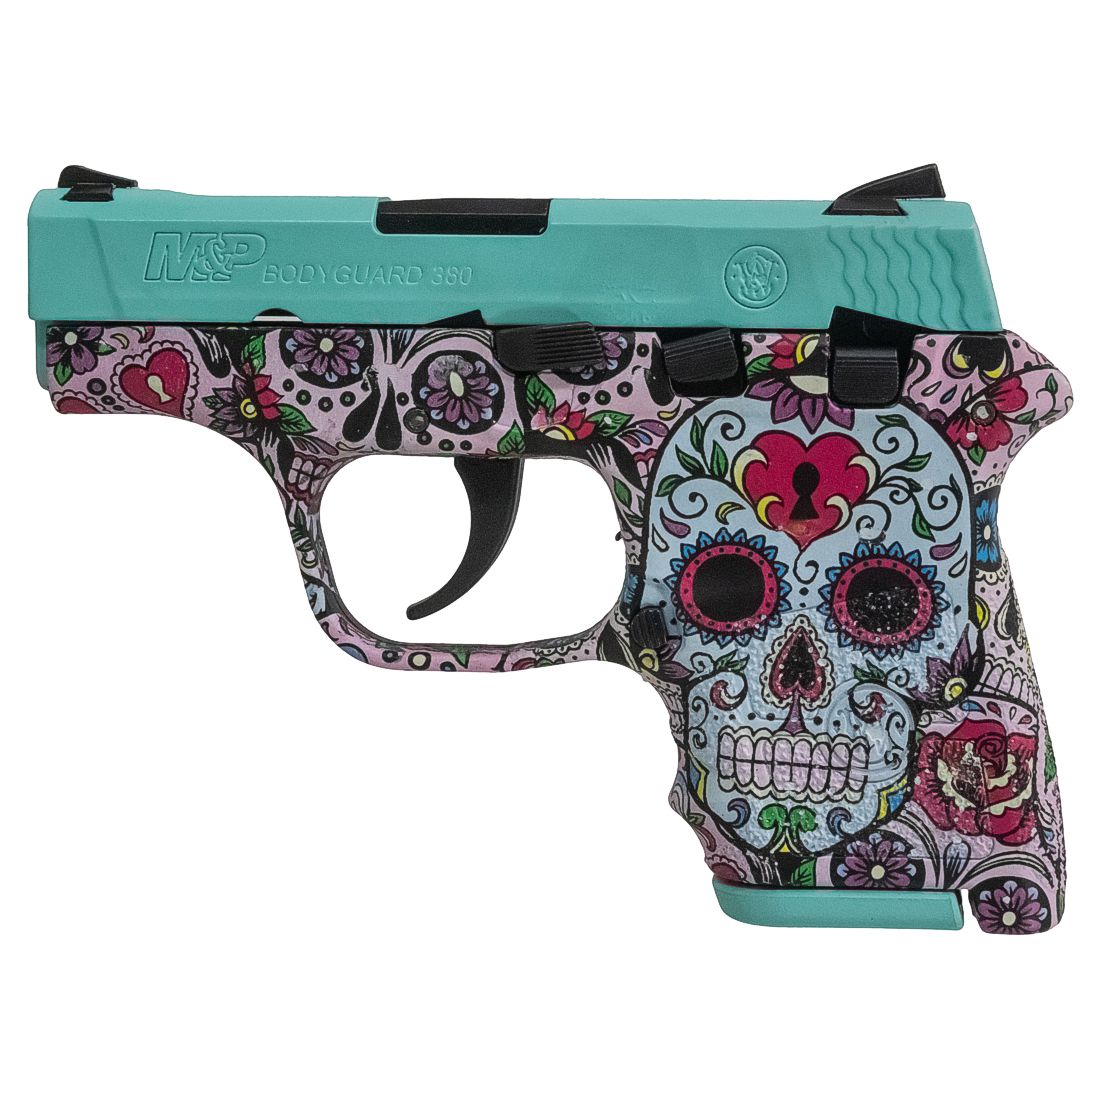 Smith Wesson Bodyguard Sugar Skull 380 Mm Texas Shooter S Supply